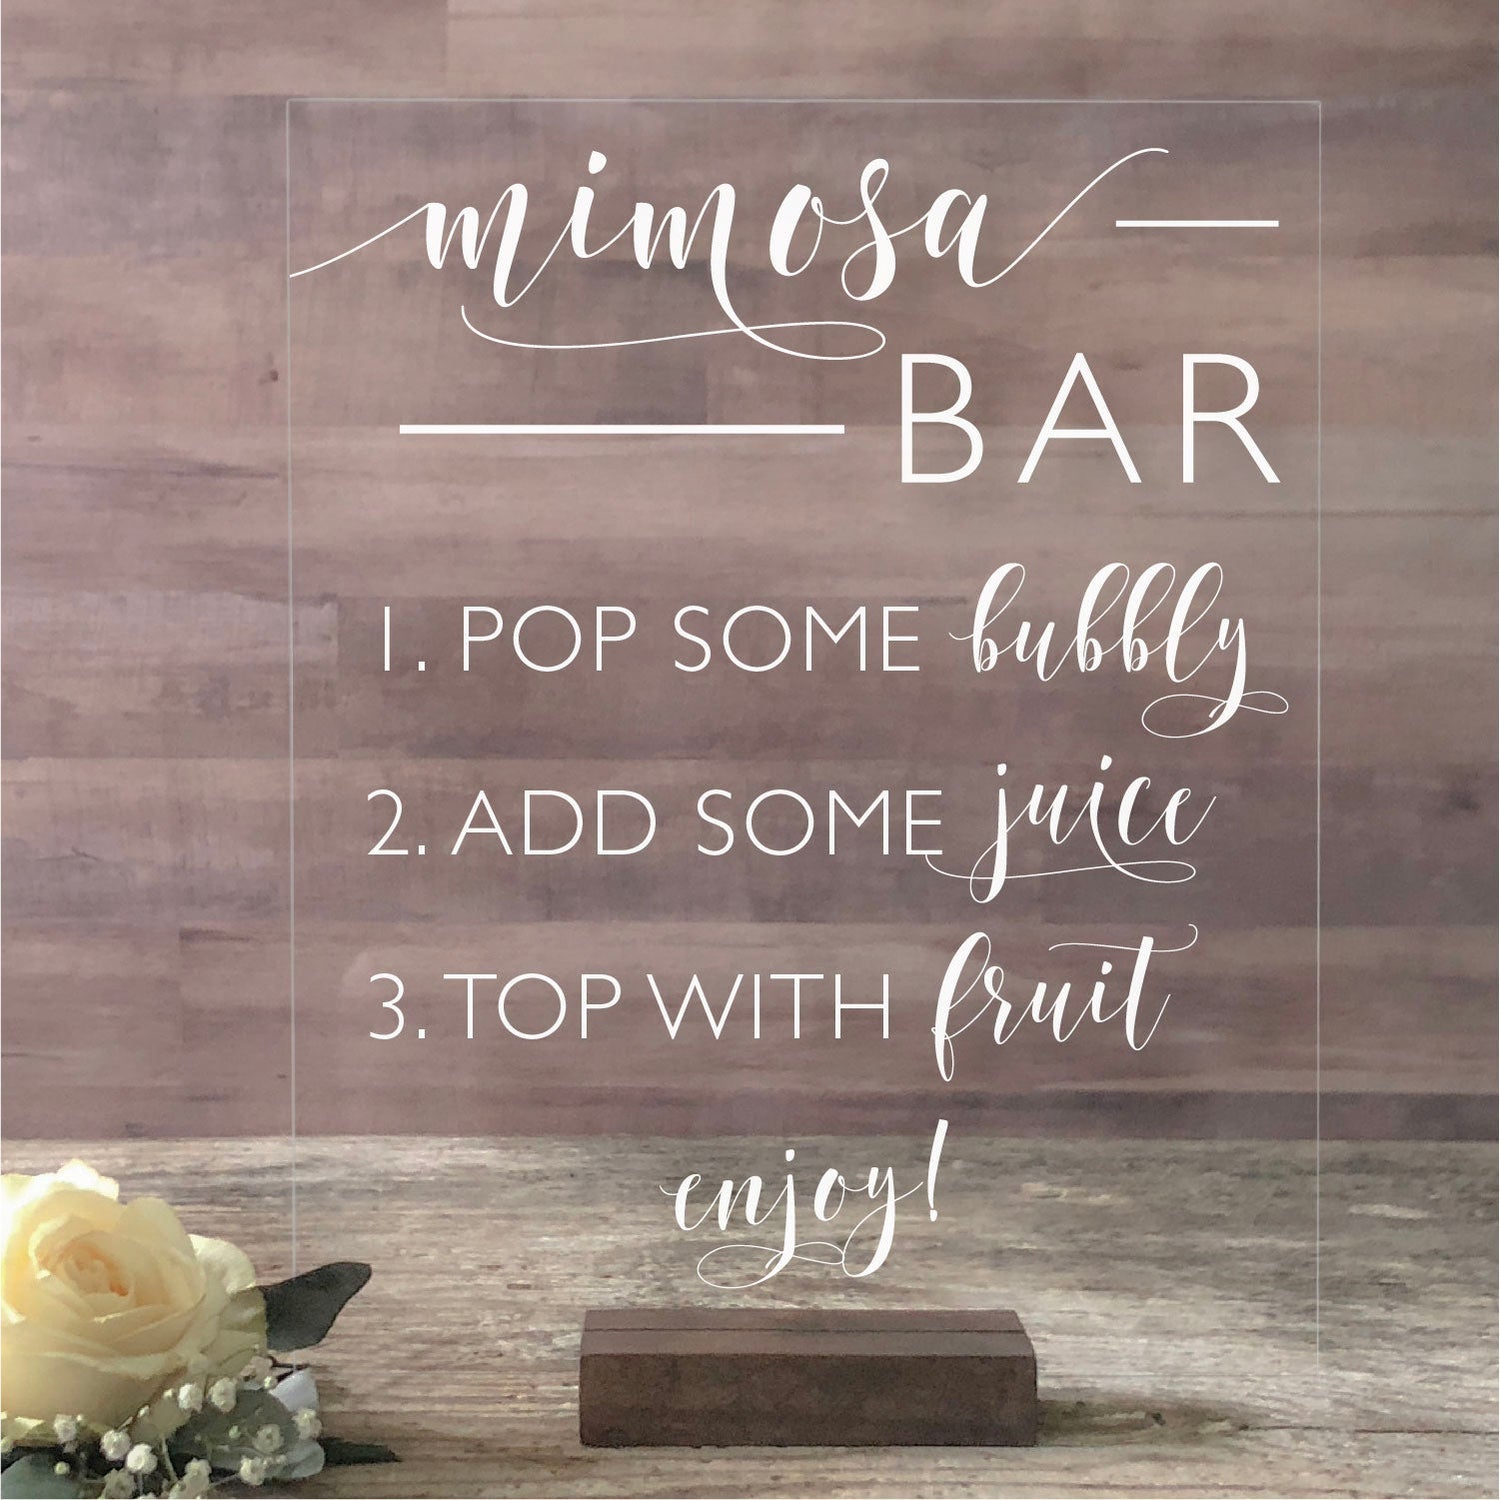 Mimosa Bar Wedding Bar Sign